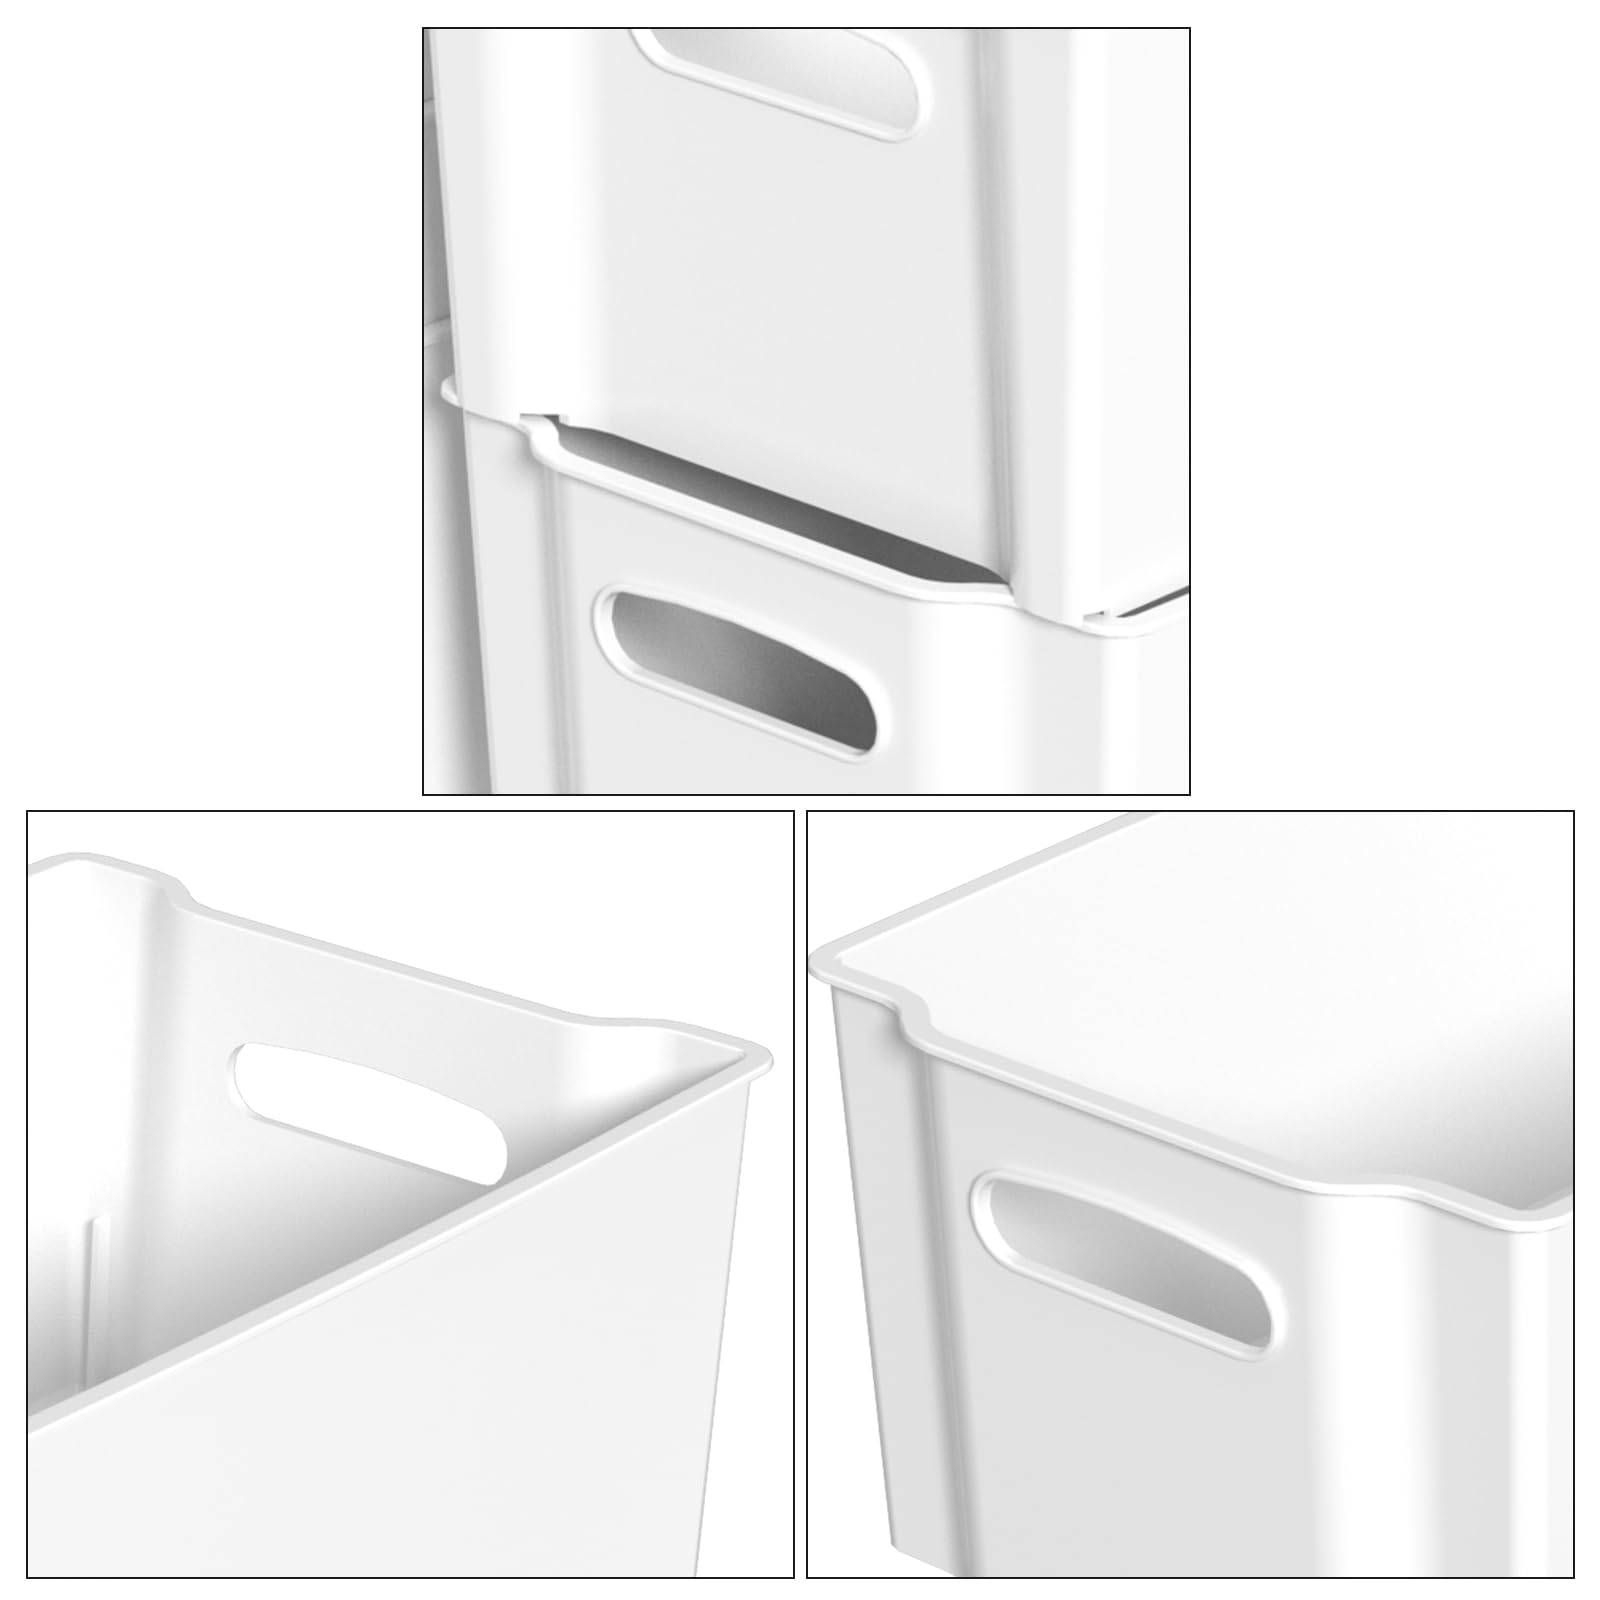 Hommp 4-Pack Plastic Storage Bin, Stackable Pantry Organizer Bins, White